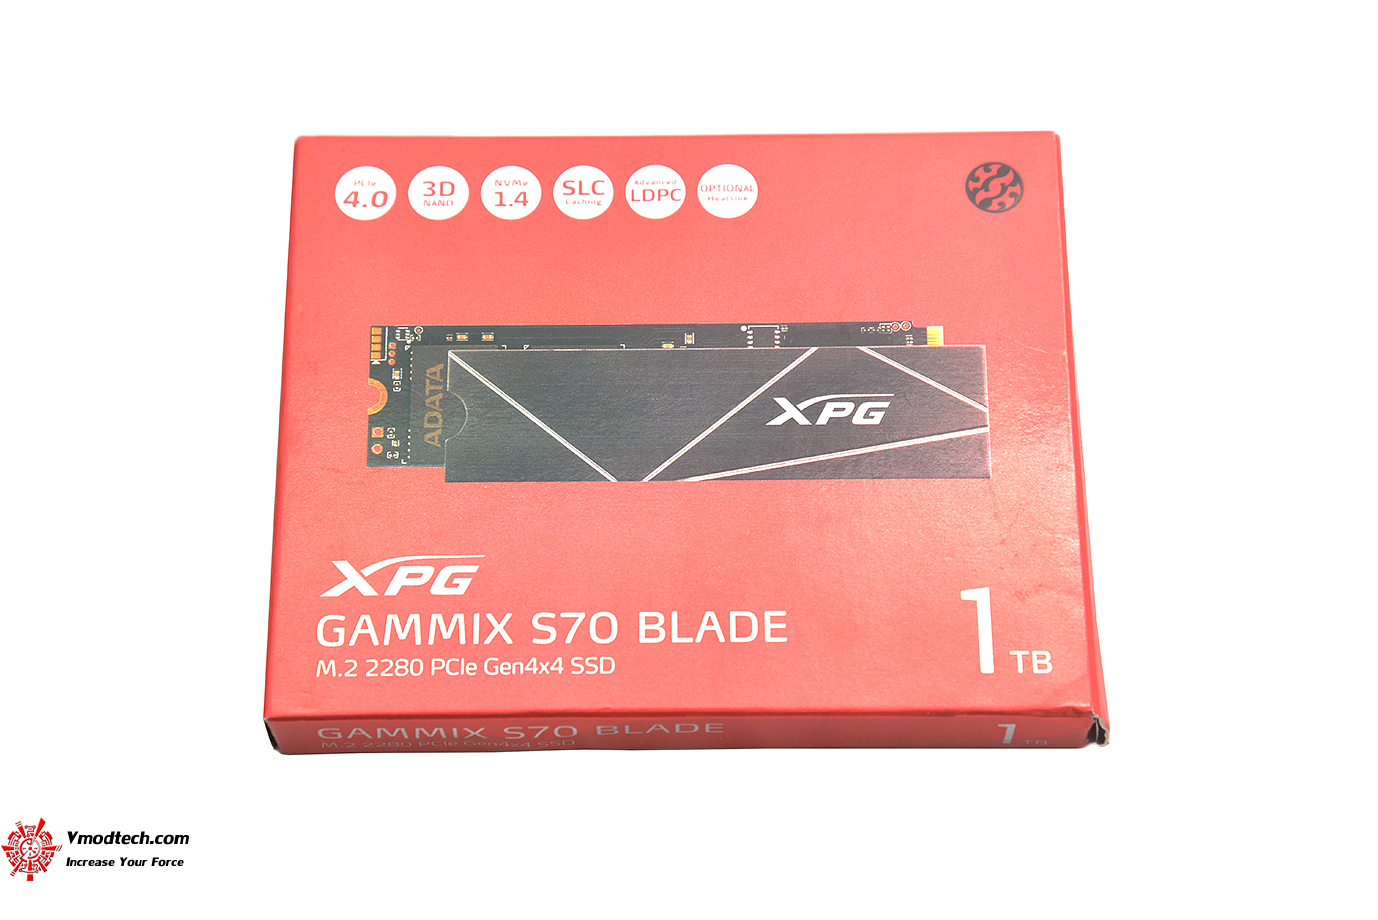 dsc 1840 XPG GAMMIX S70 BLADE PCIe Gen4x4 M.2 2280 Solid State Drive 1TB REVIEW